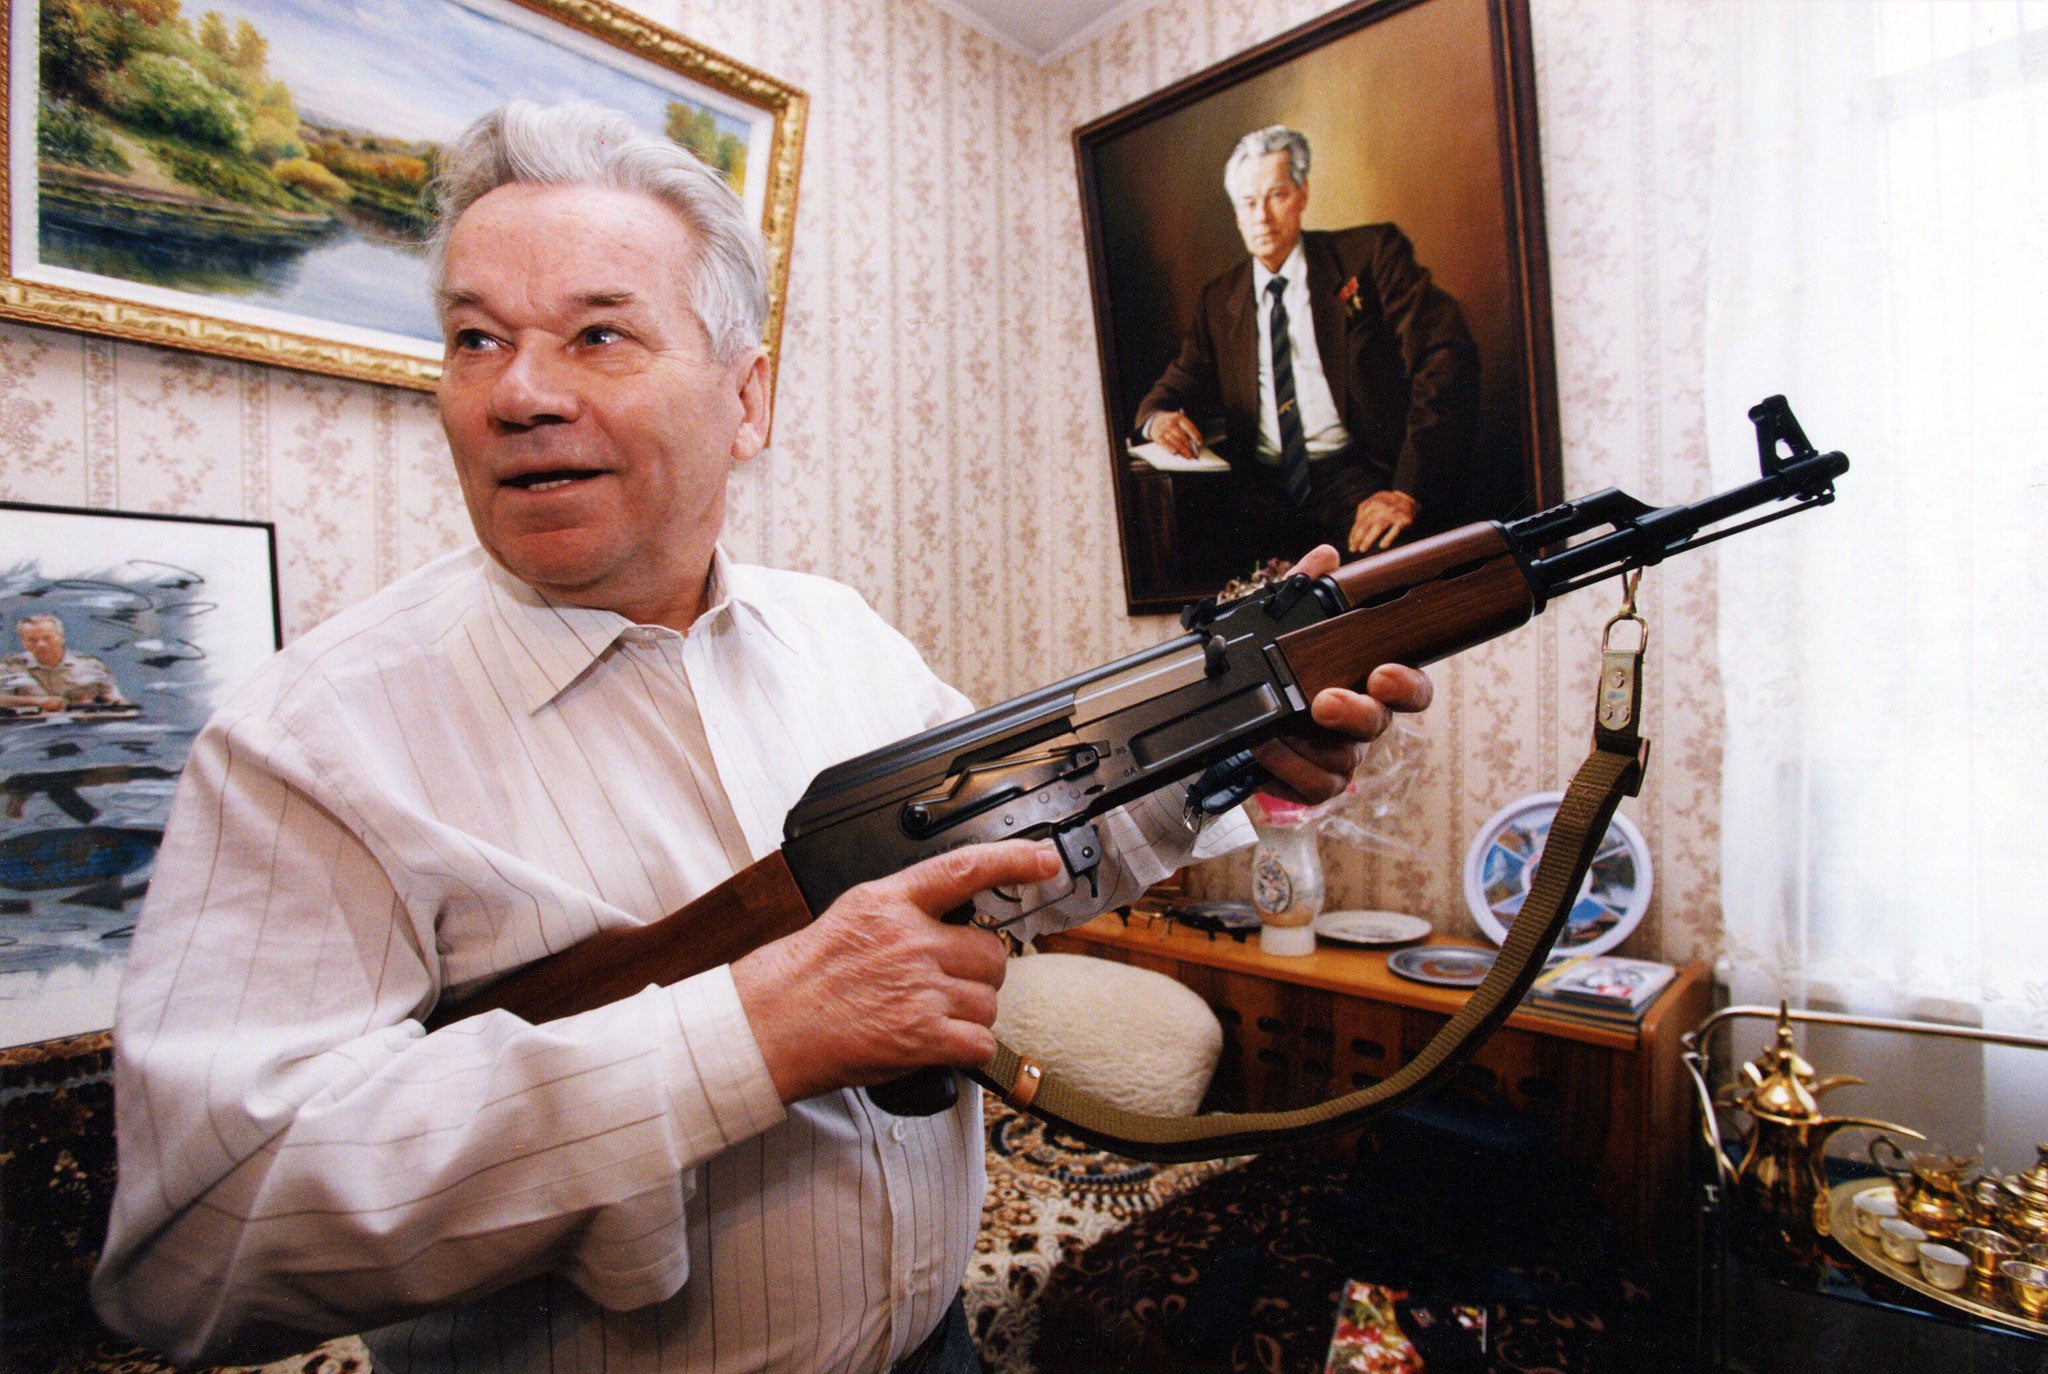 https://static.independent.co.uk/s3fs-public/thumbnails/image/2013/12/23/16/mikhail-Kalashnikov.jpg